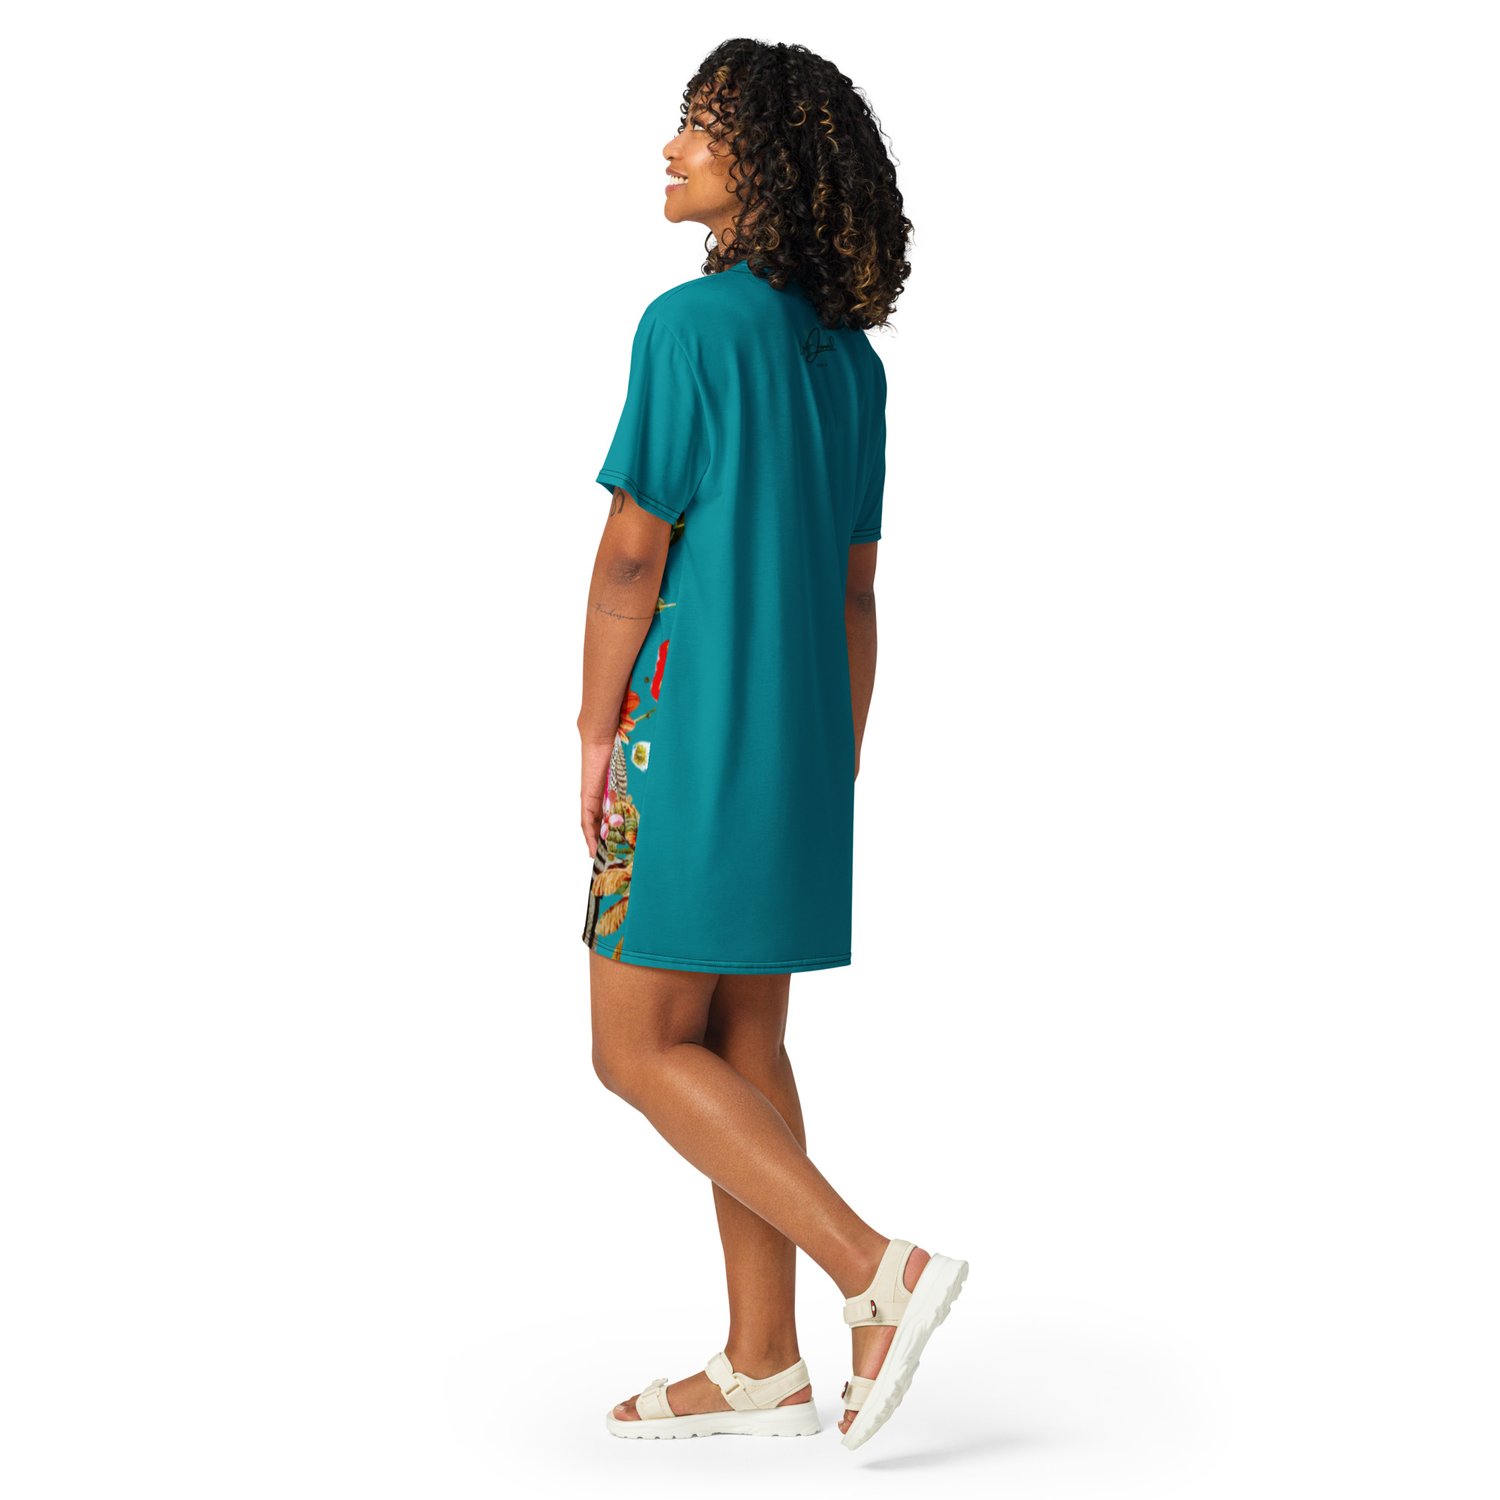 Image of FREE SHIPPING - Mizz Biloba - Spring Blue - All Over Print T-shirt Dress